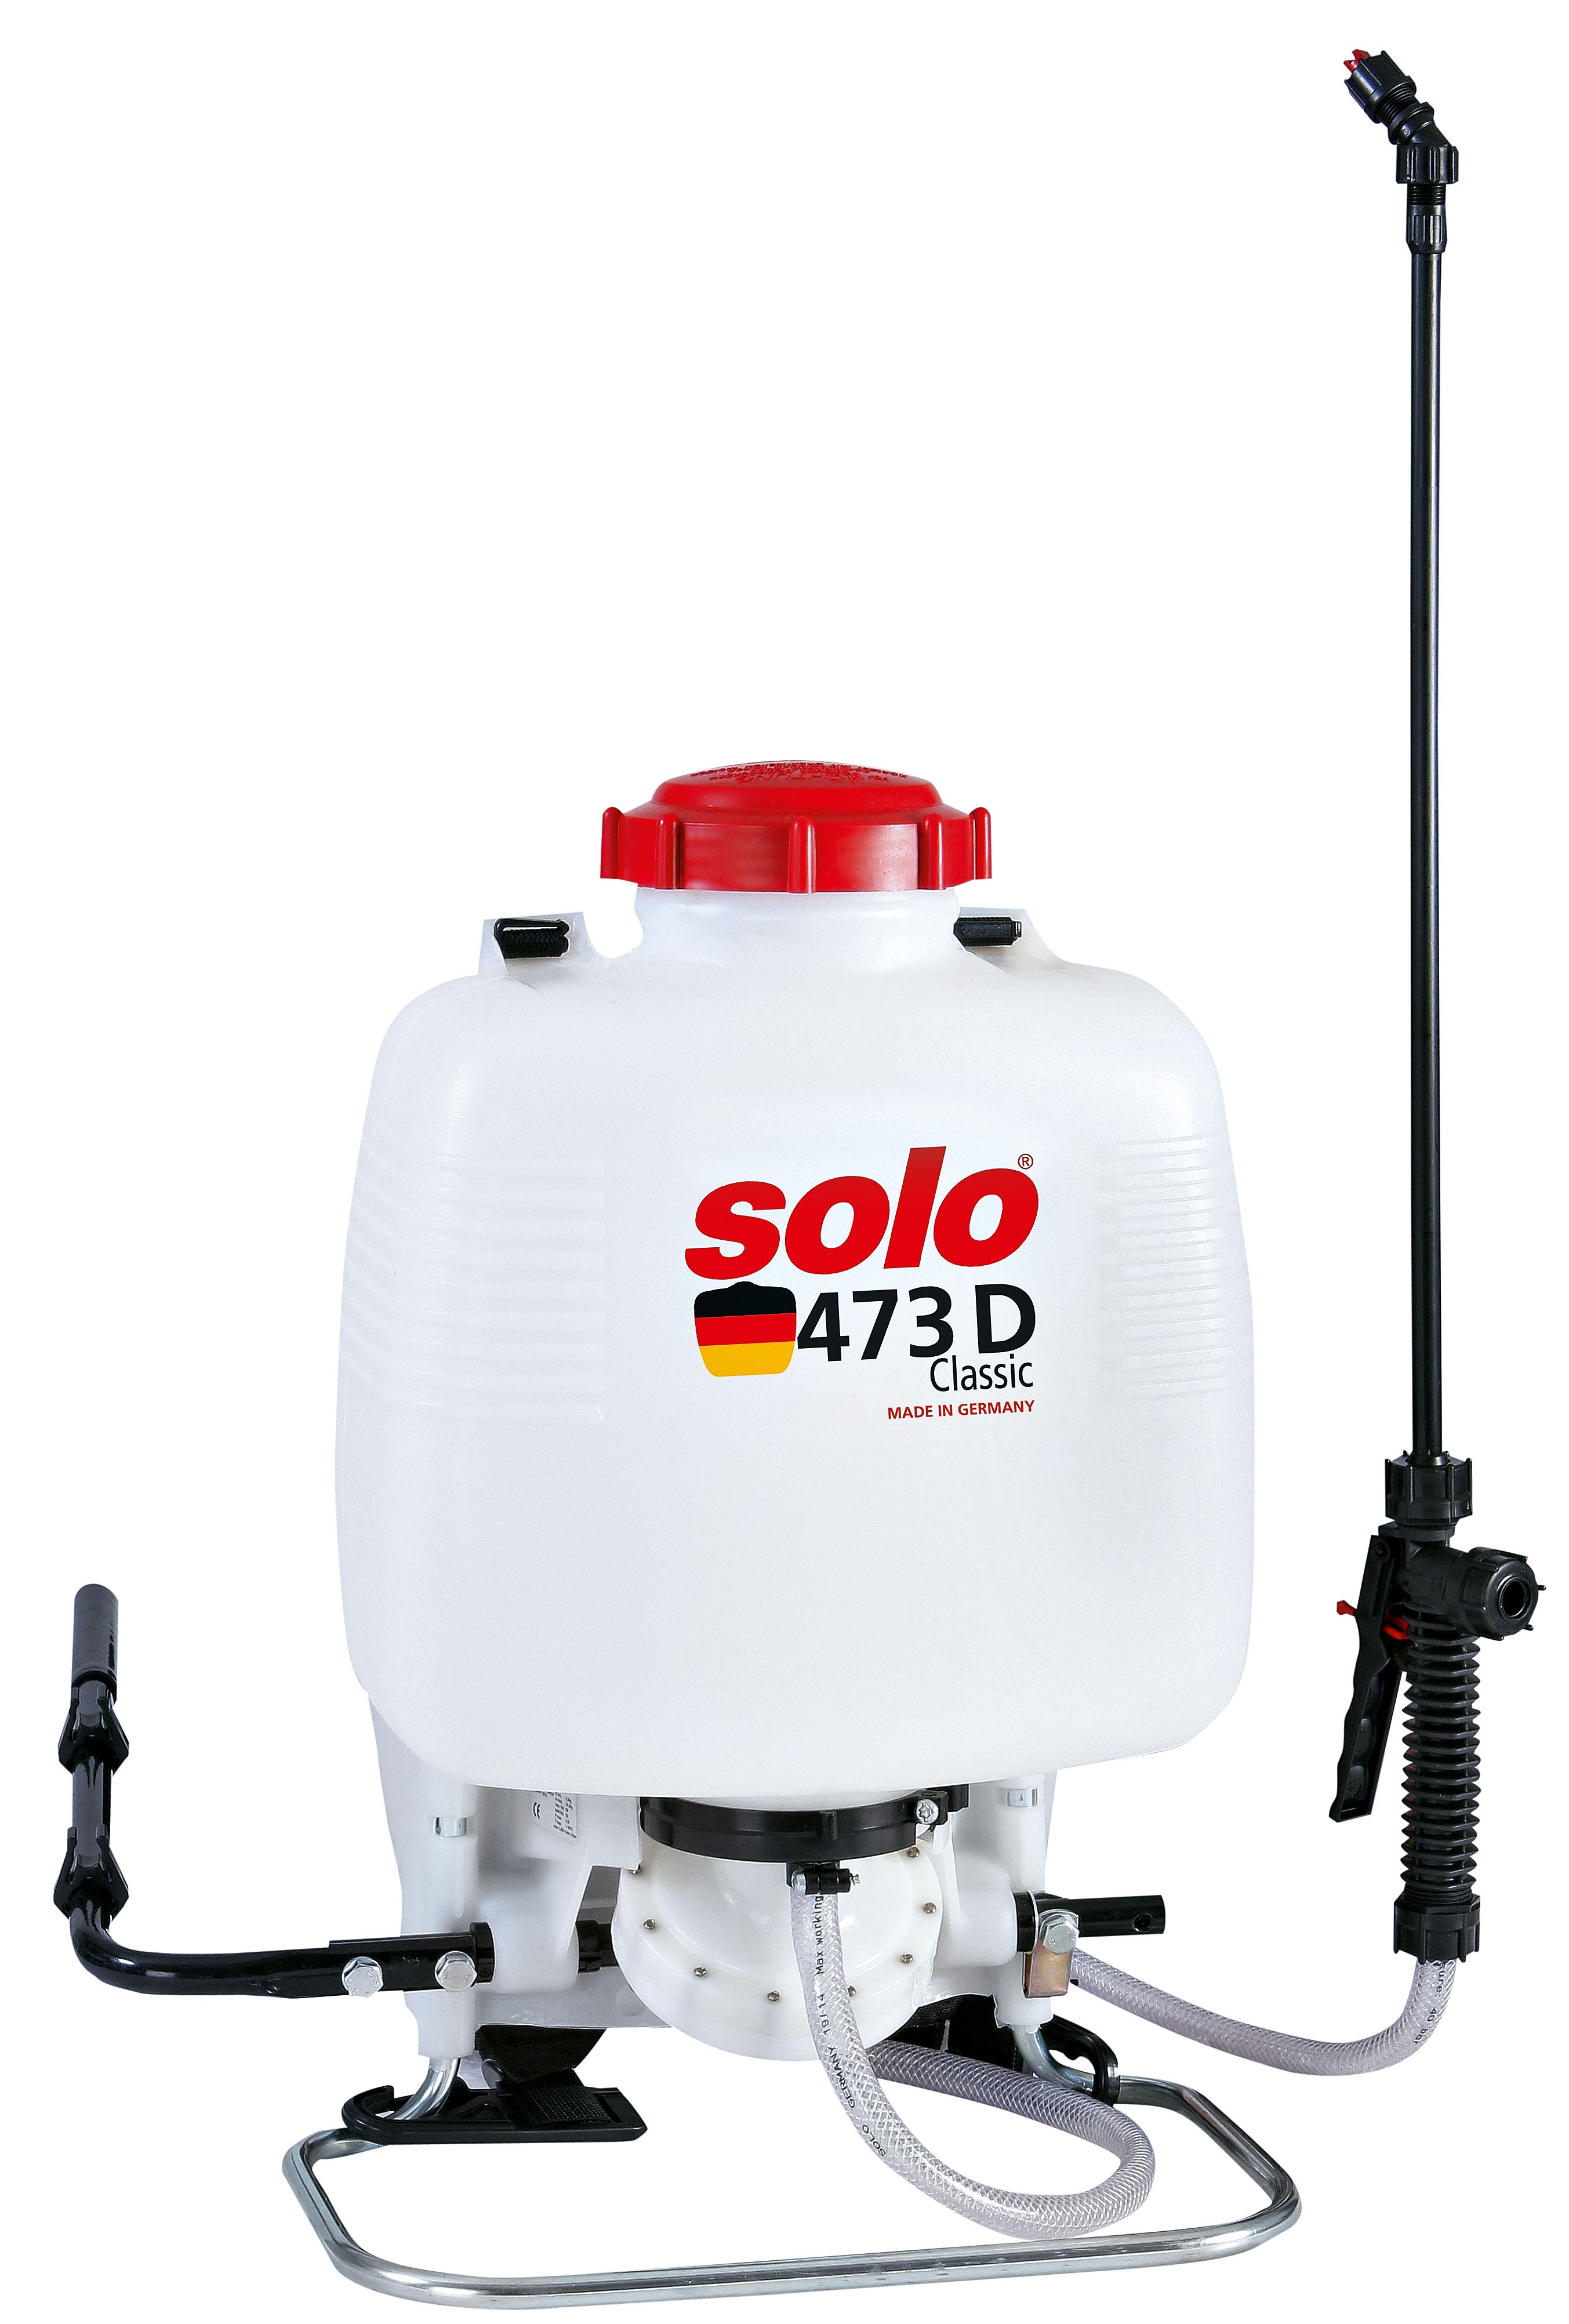 Solo 473D Classic Garden Backpack Sprayer - 10L